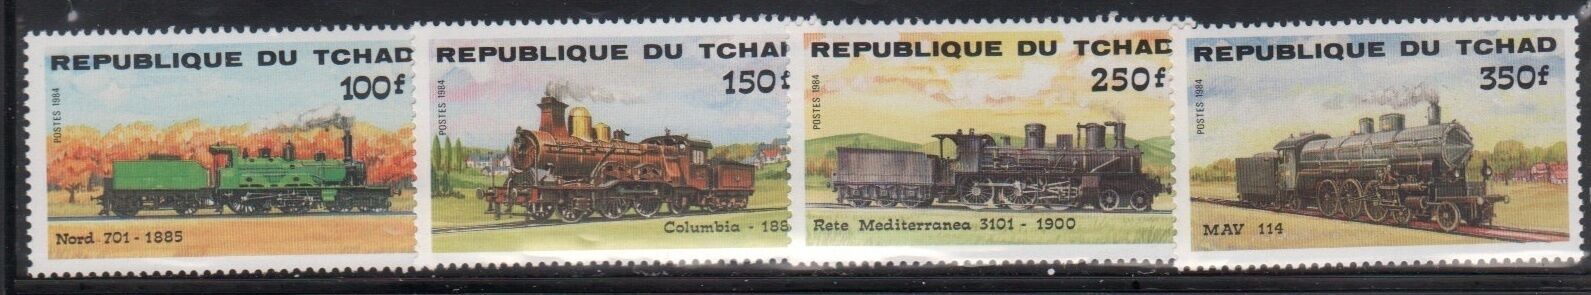 Tchad 1984 - Locomotive, serie neuzata